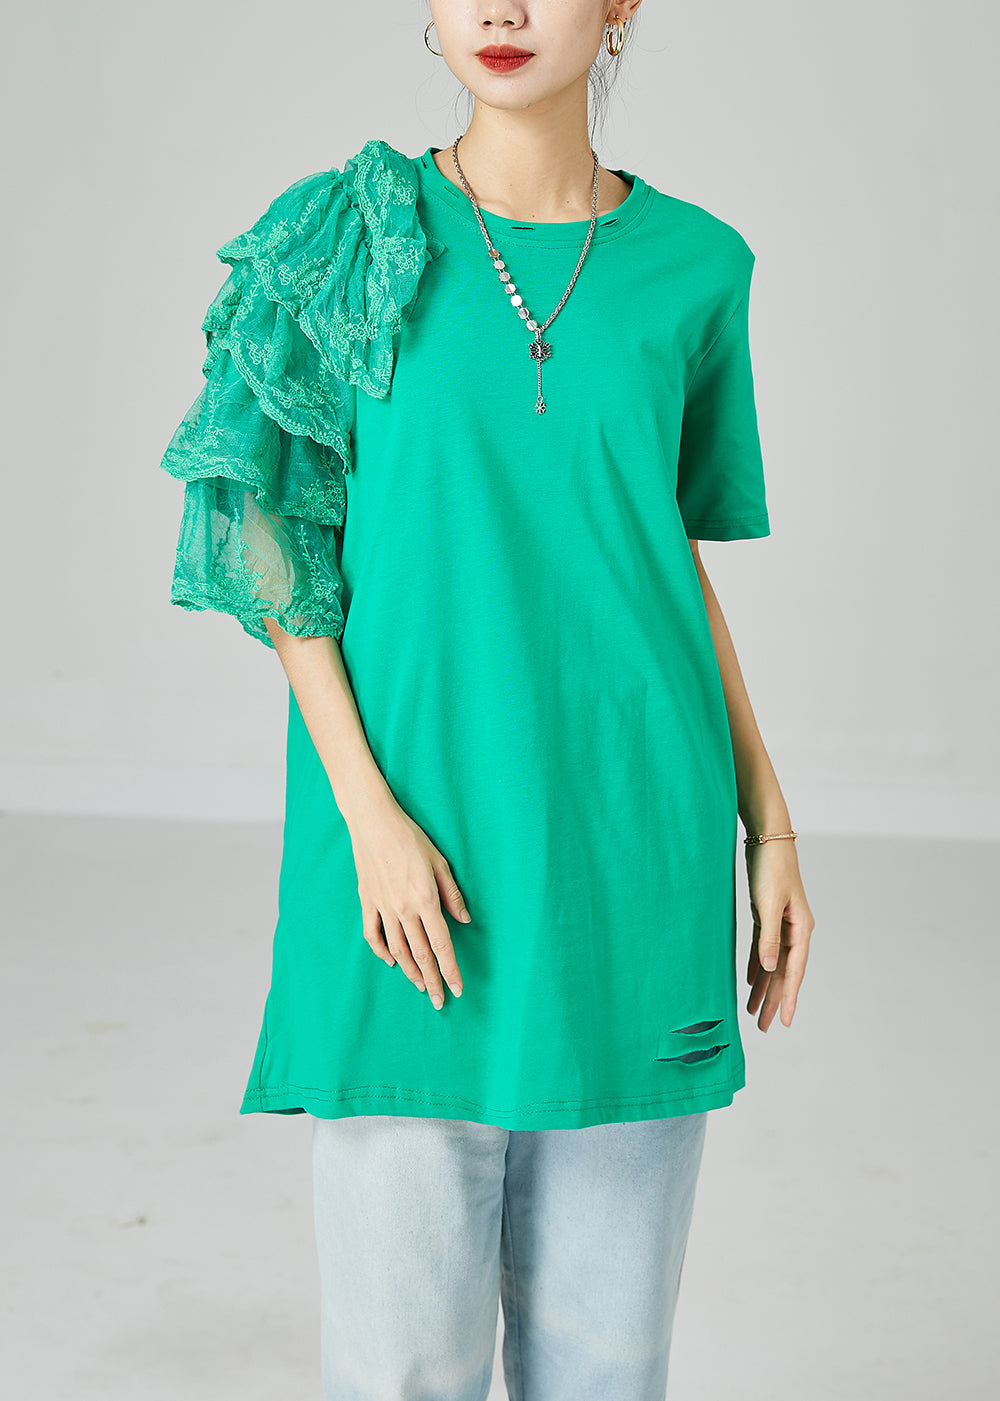 Art Green Asymmetrical Patchwork Cotton Ripped Long Tops Summer LY2455 - fabuloryshop